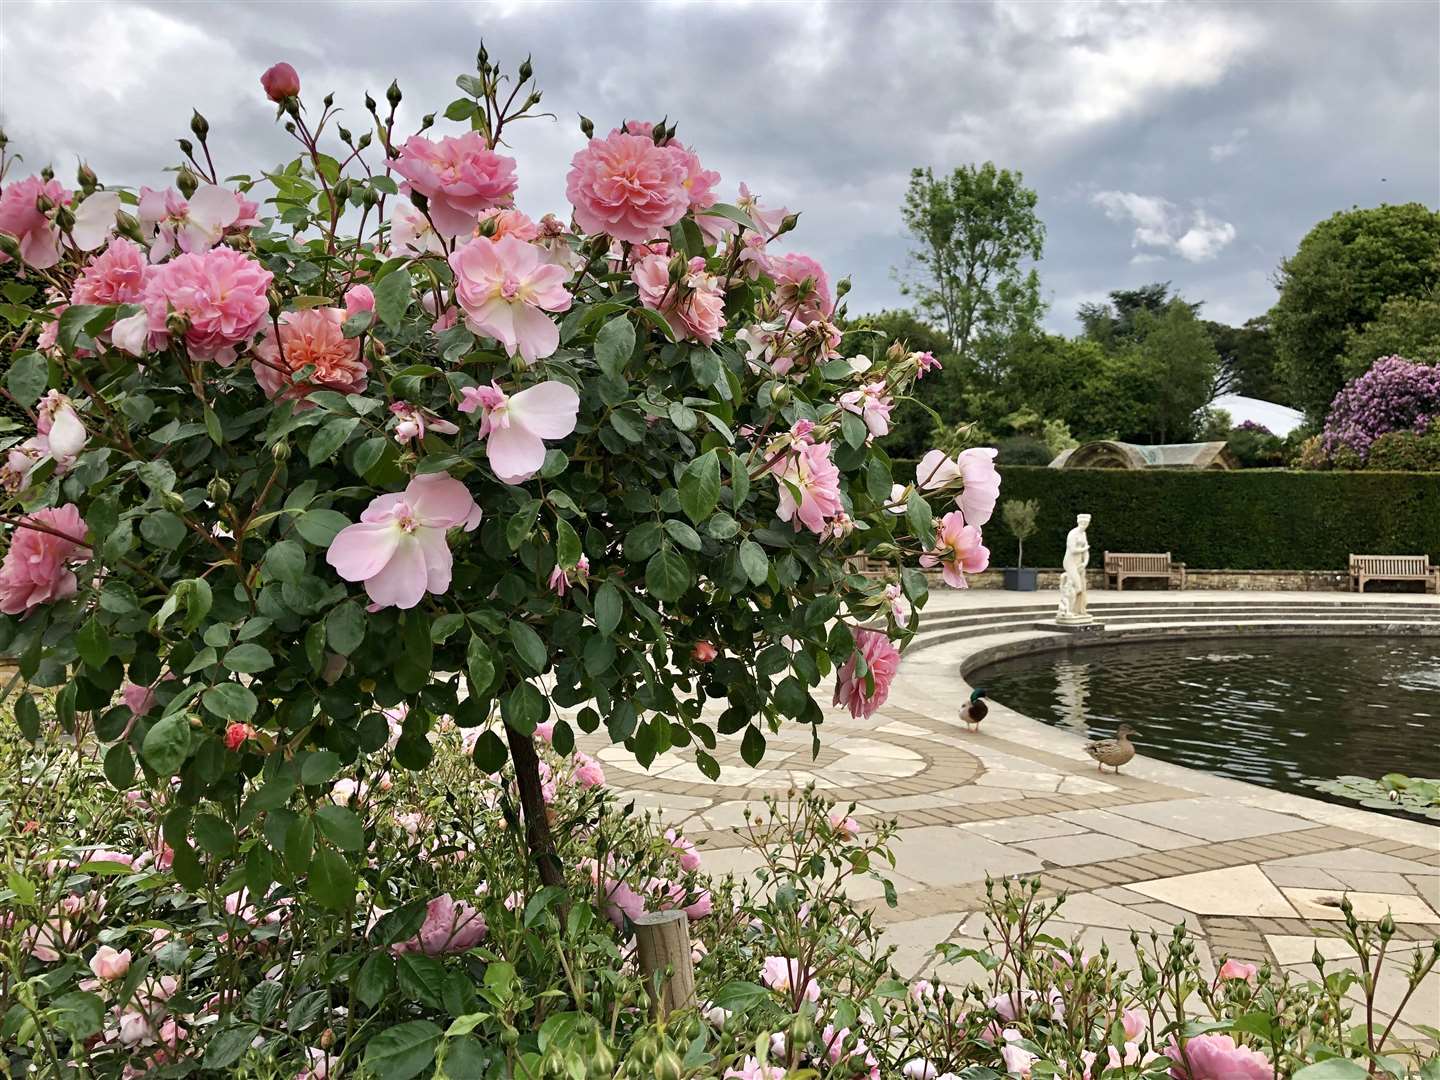 Anne Boleyn Rose Garden at Hever